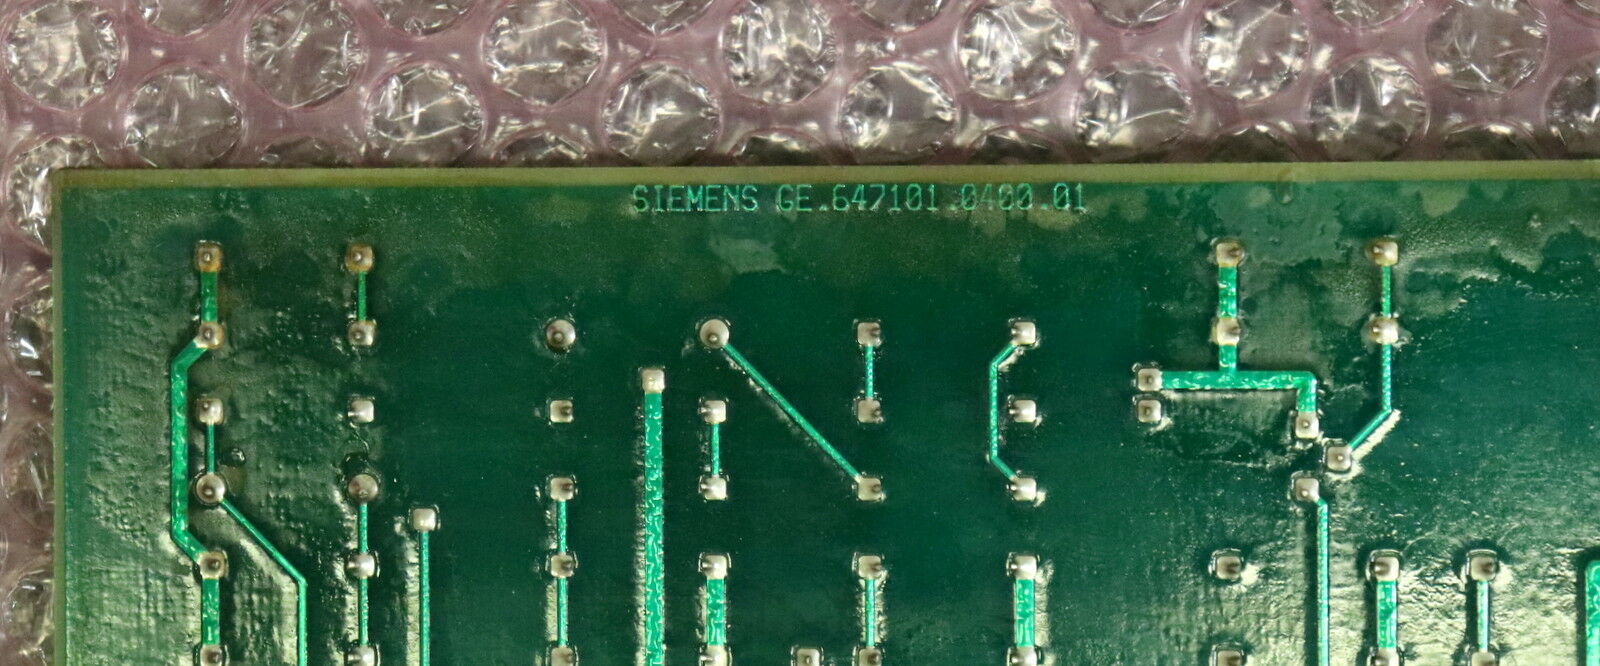 SIEMENS SIMOREG Karte für Transistorsteller 6RA4001-1AA01N 647101.0400.01